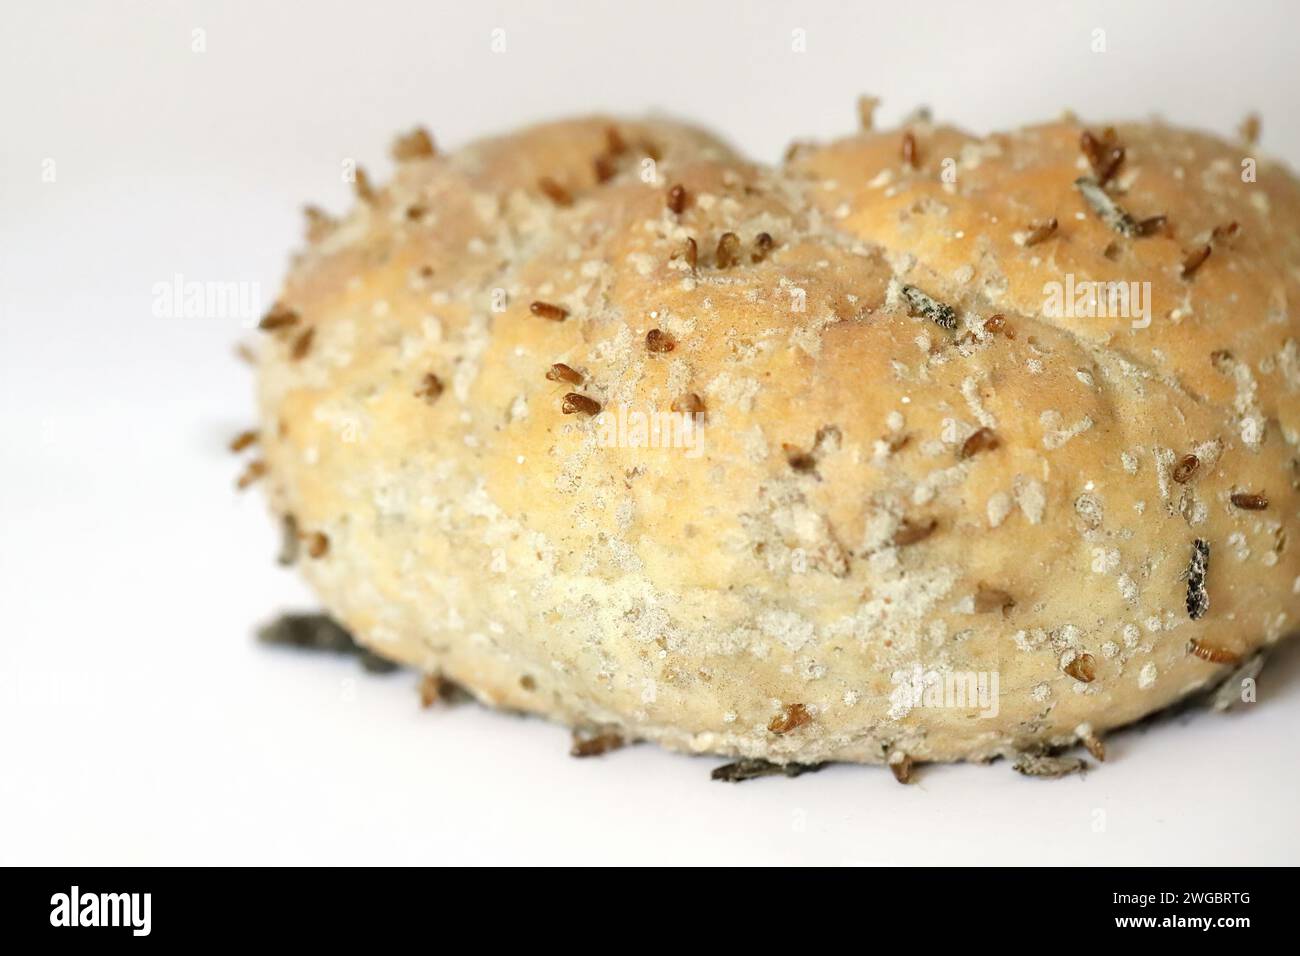 European grain worm or European grain moth (Nemapogon granella). Bread, rolls destroyed by pest. Stock Photo